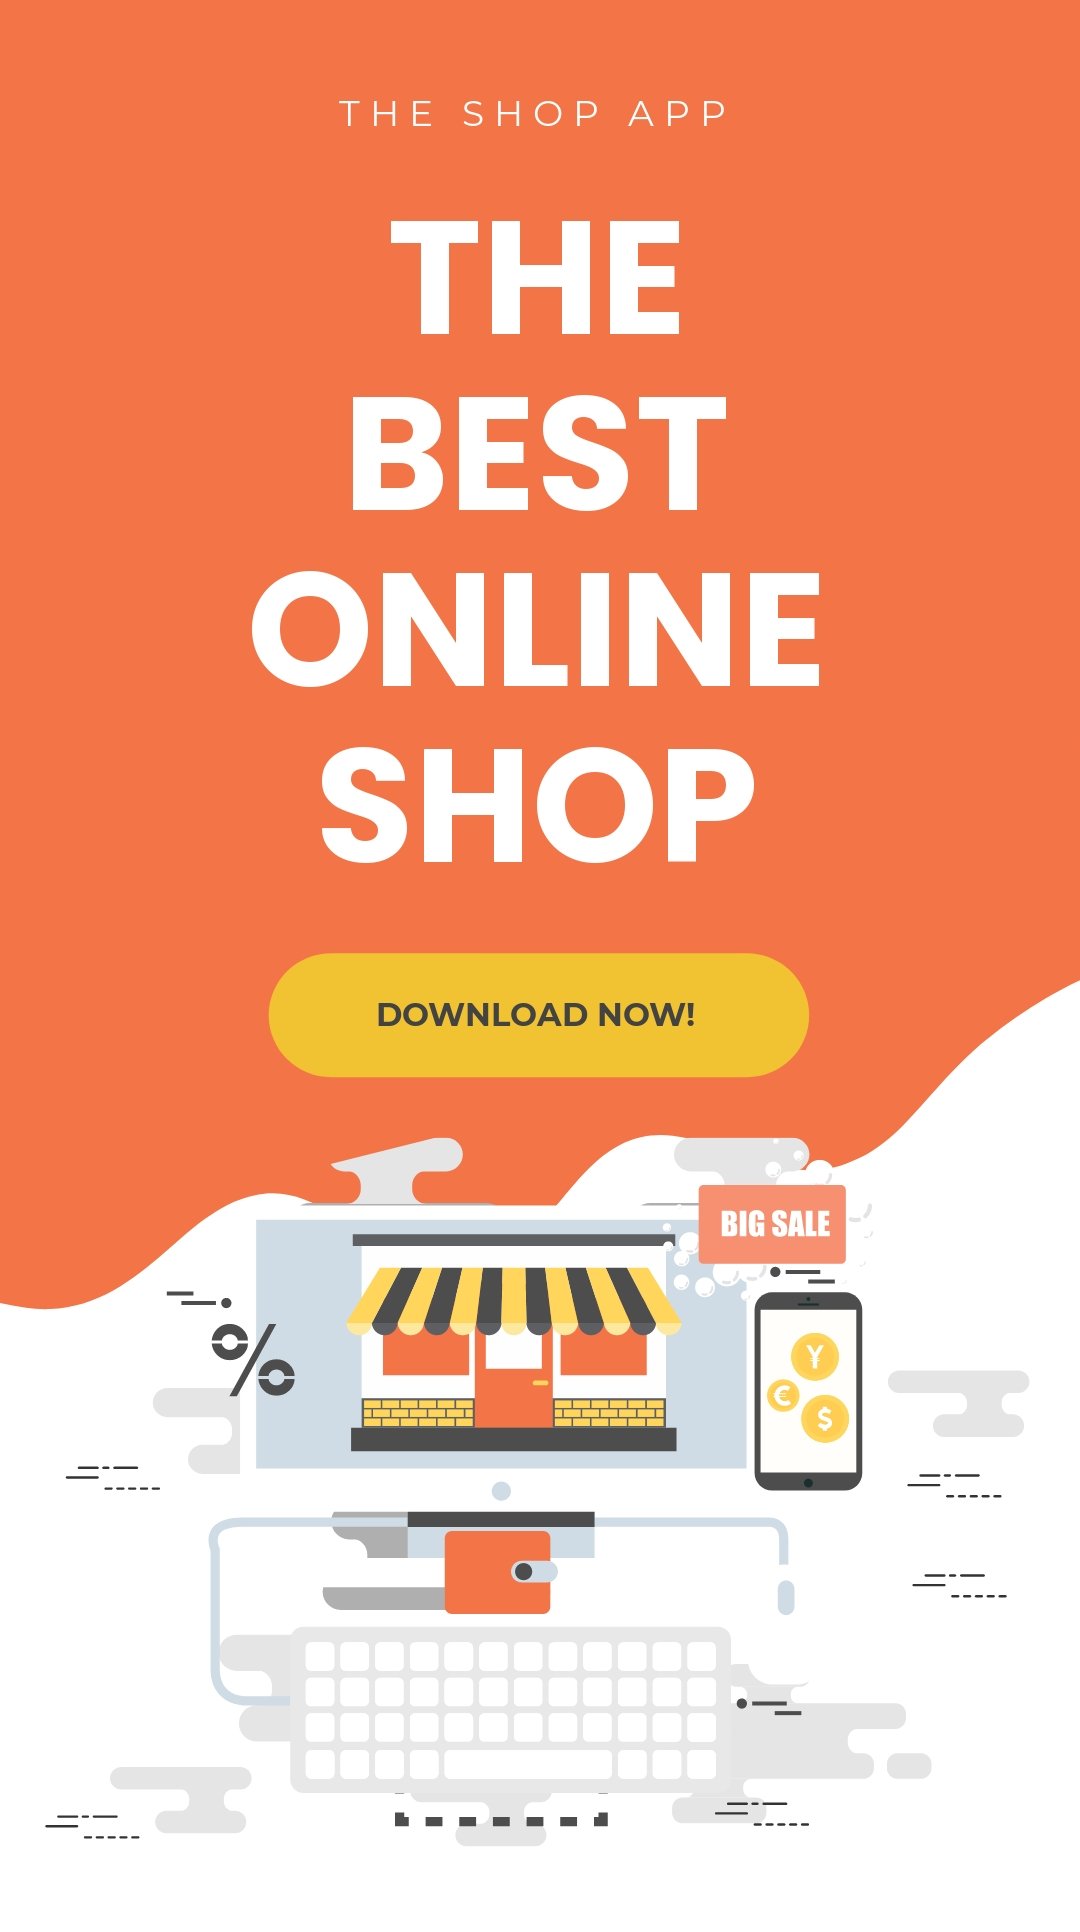 Free Online Shop App Promotion Whatsapp Image Post Template.jpe